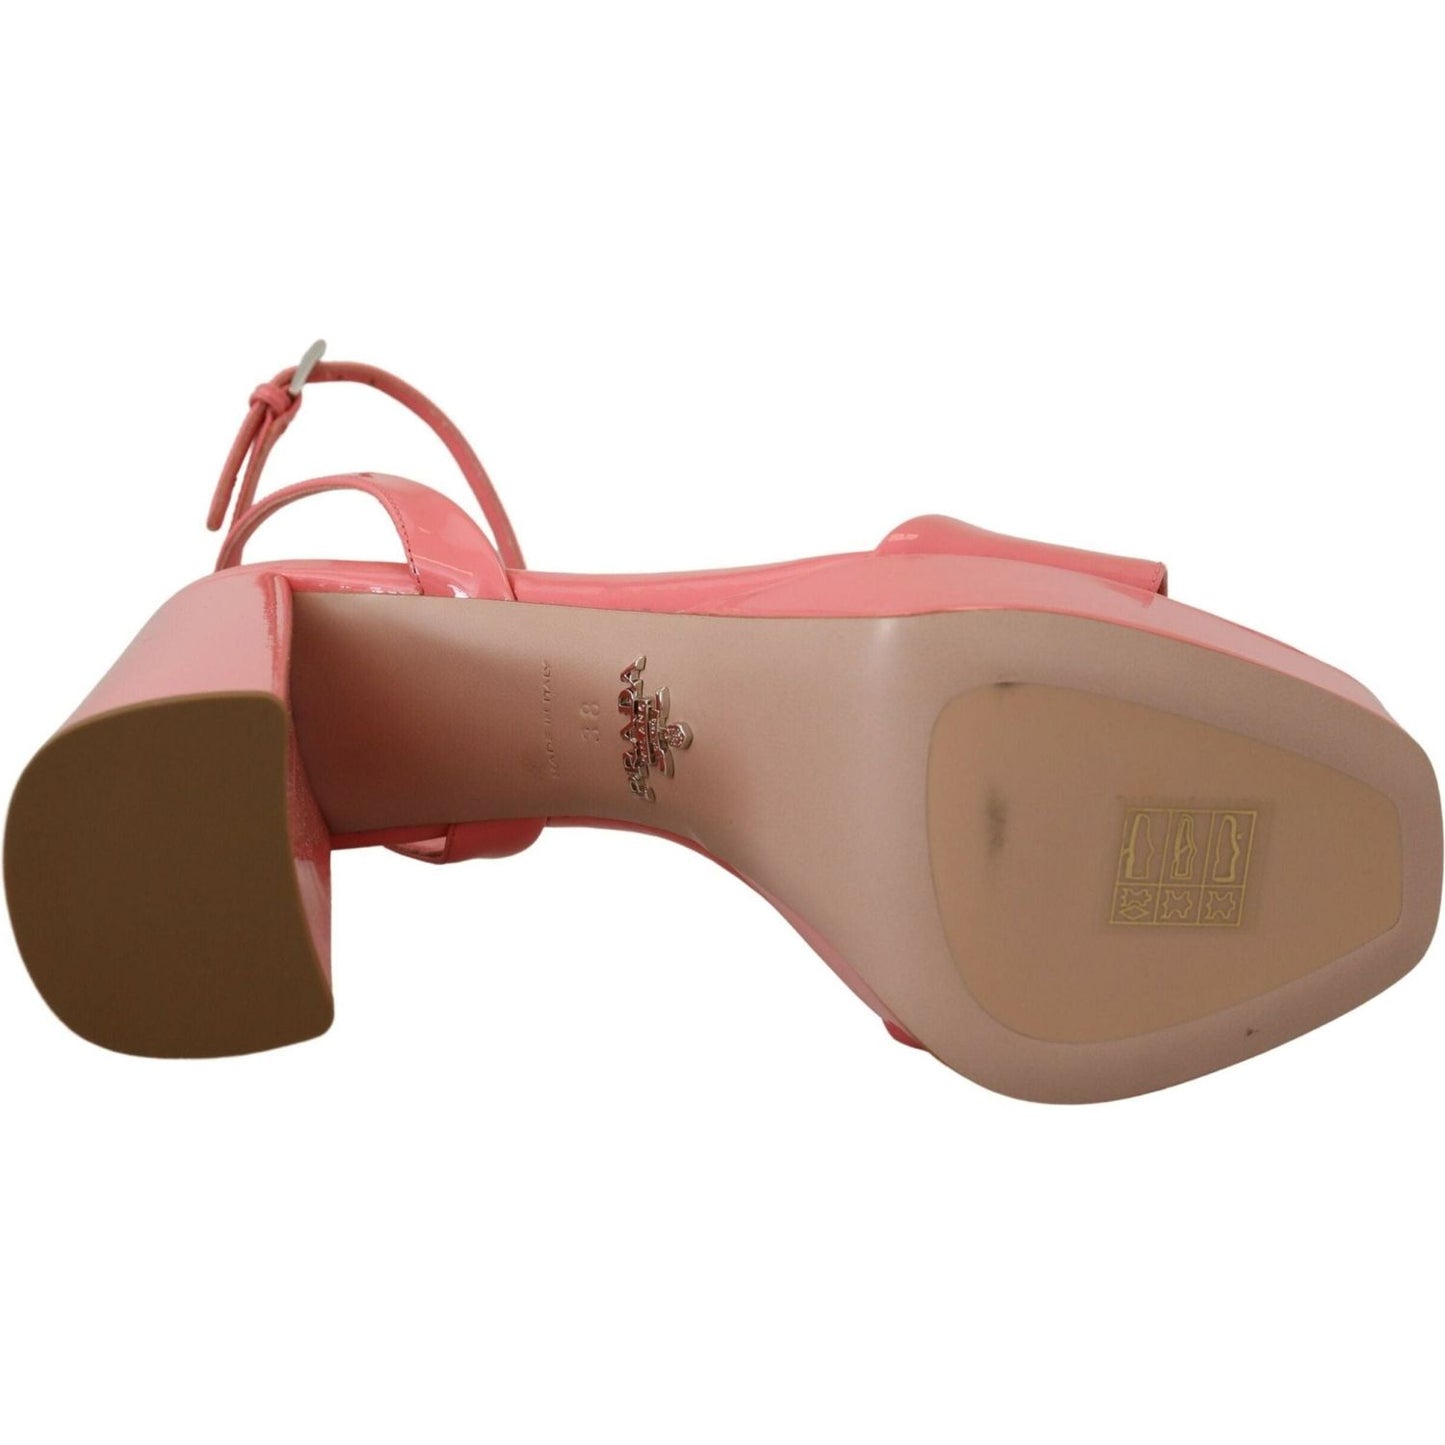 Prada Chic Pink Patent Leather Platform Sandals pink-patent-sandals-ankle-strap-heels-sandal